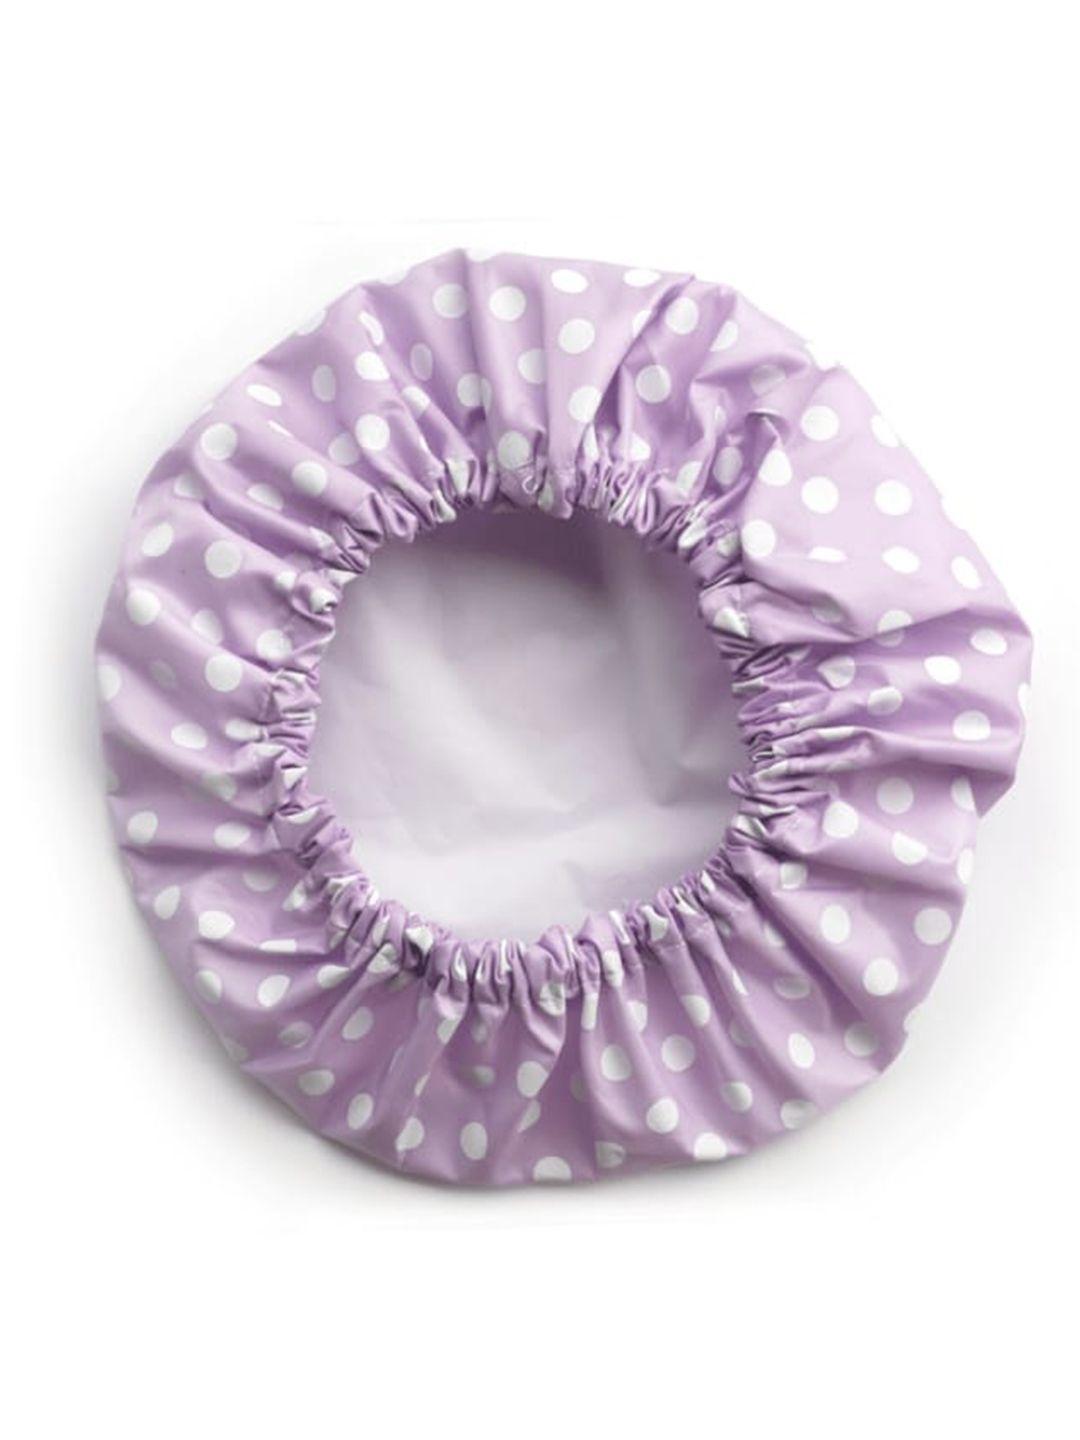 basicare purple & white polka dot printed shower cap